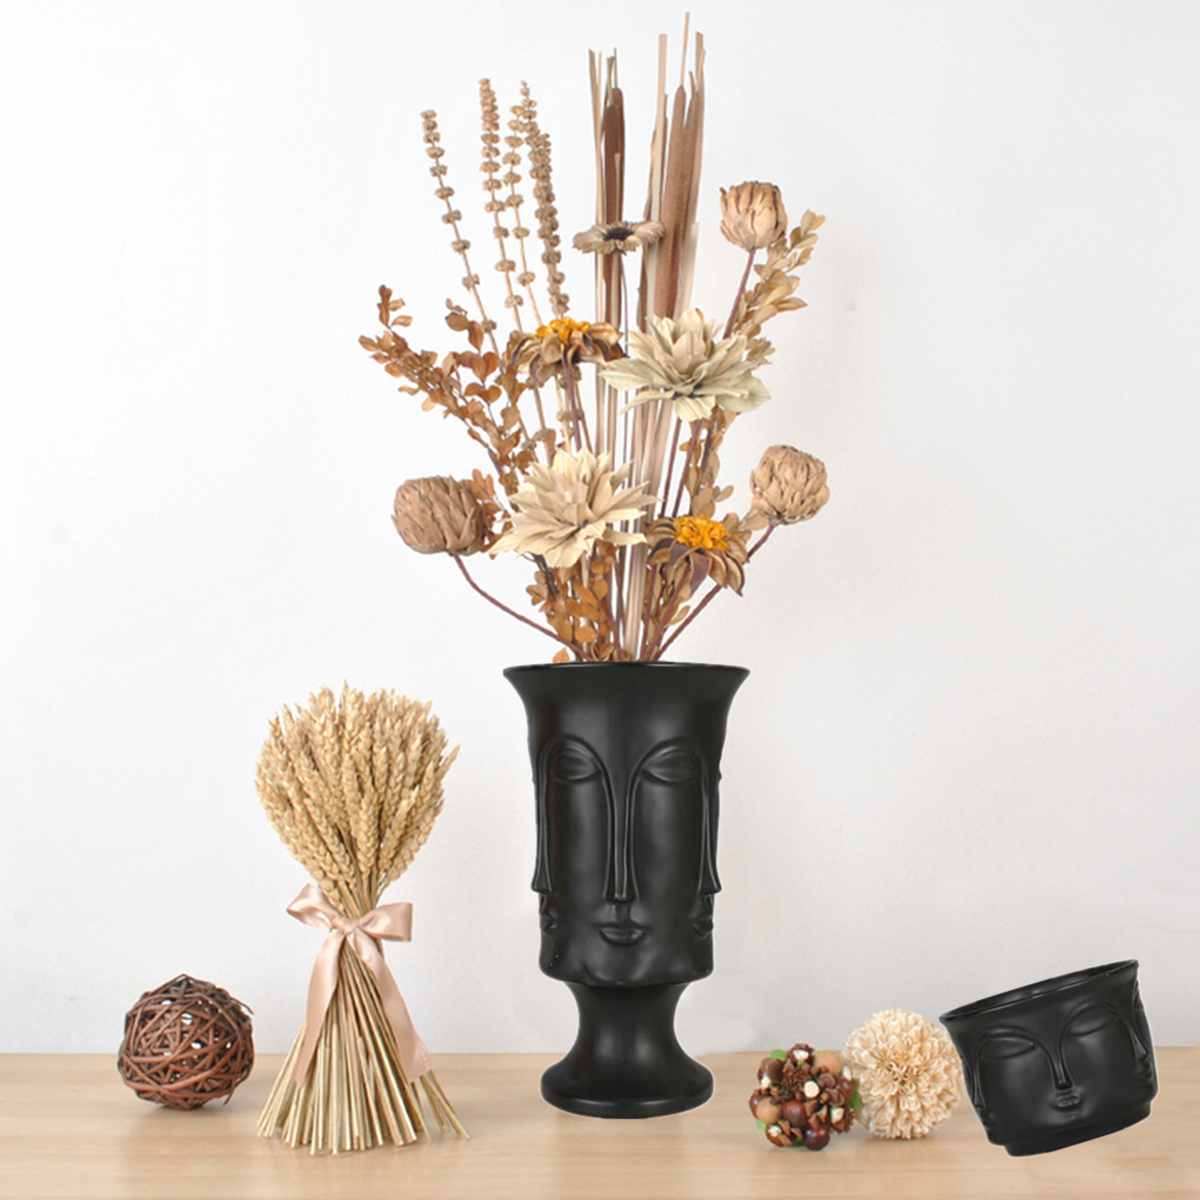 Minimalist-Artificial-Flower-Ceramic-Human-Face-Creative-Vase-Display-Room-Decorations-1473220-2